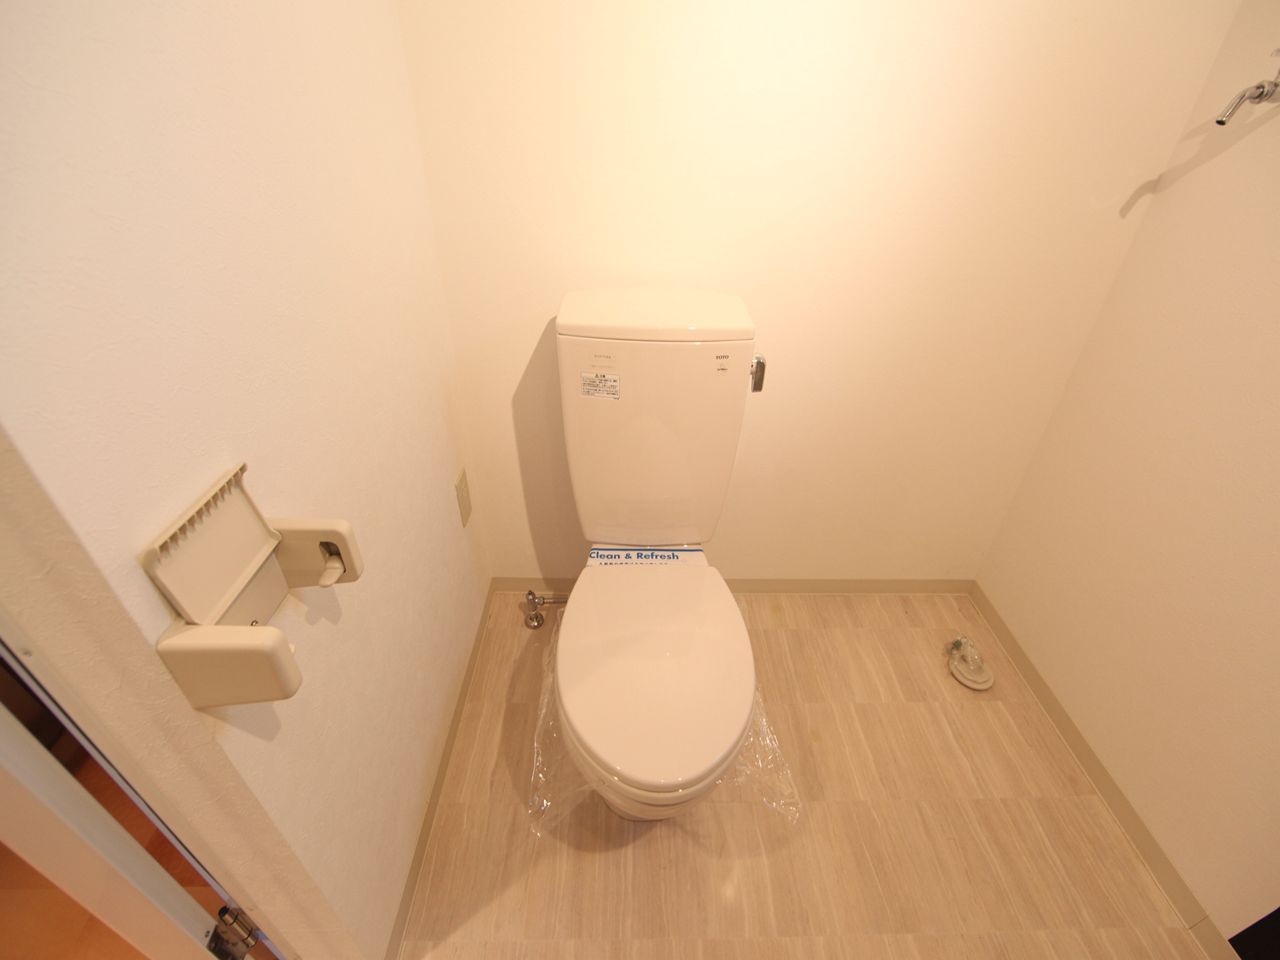 Toilet. toilet Warm water washing heating toilet seat mounting Allowed